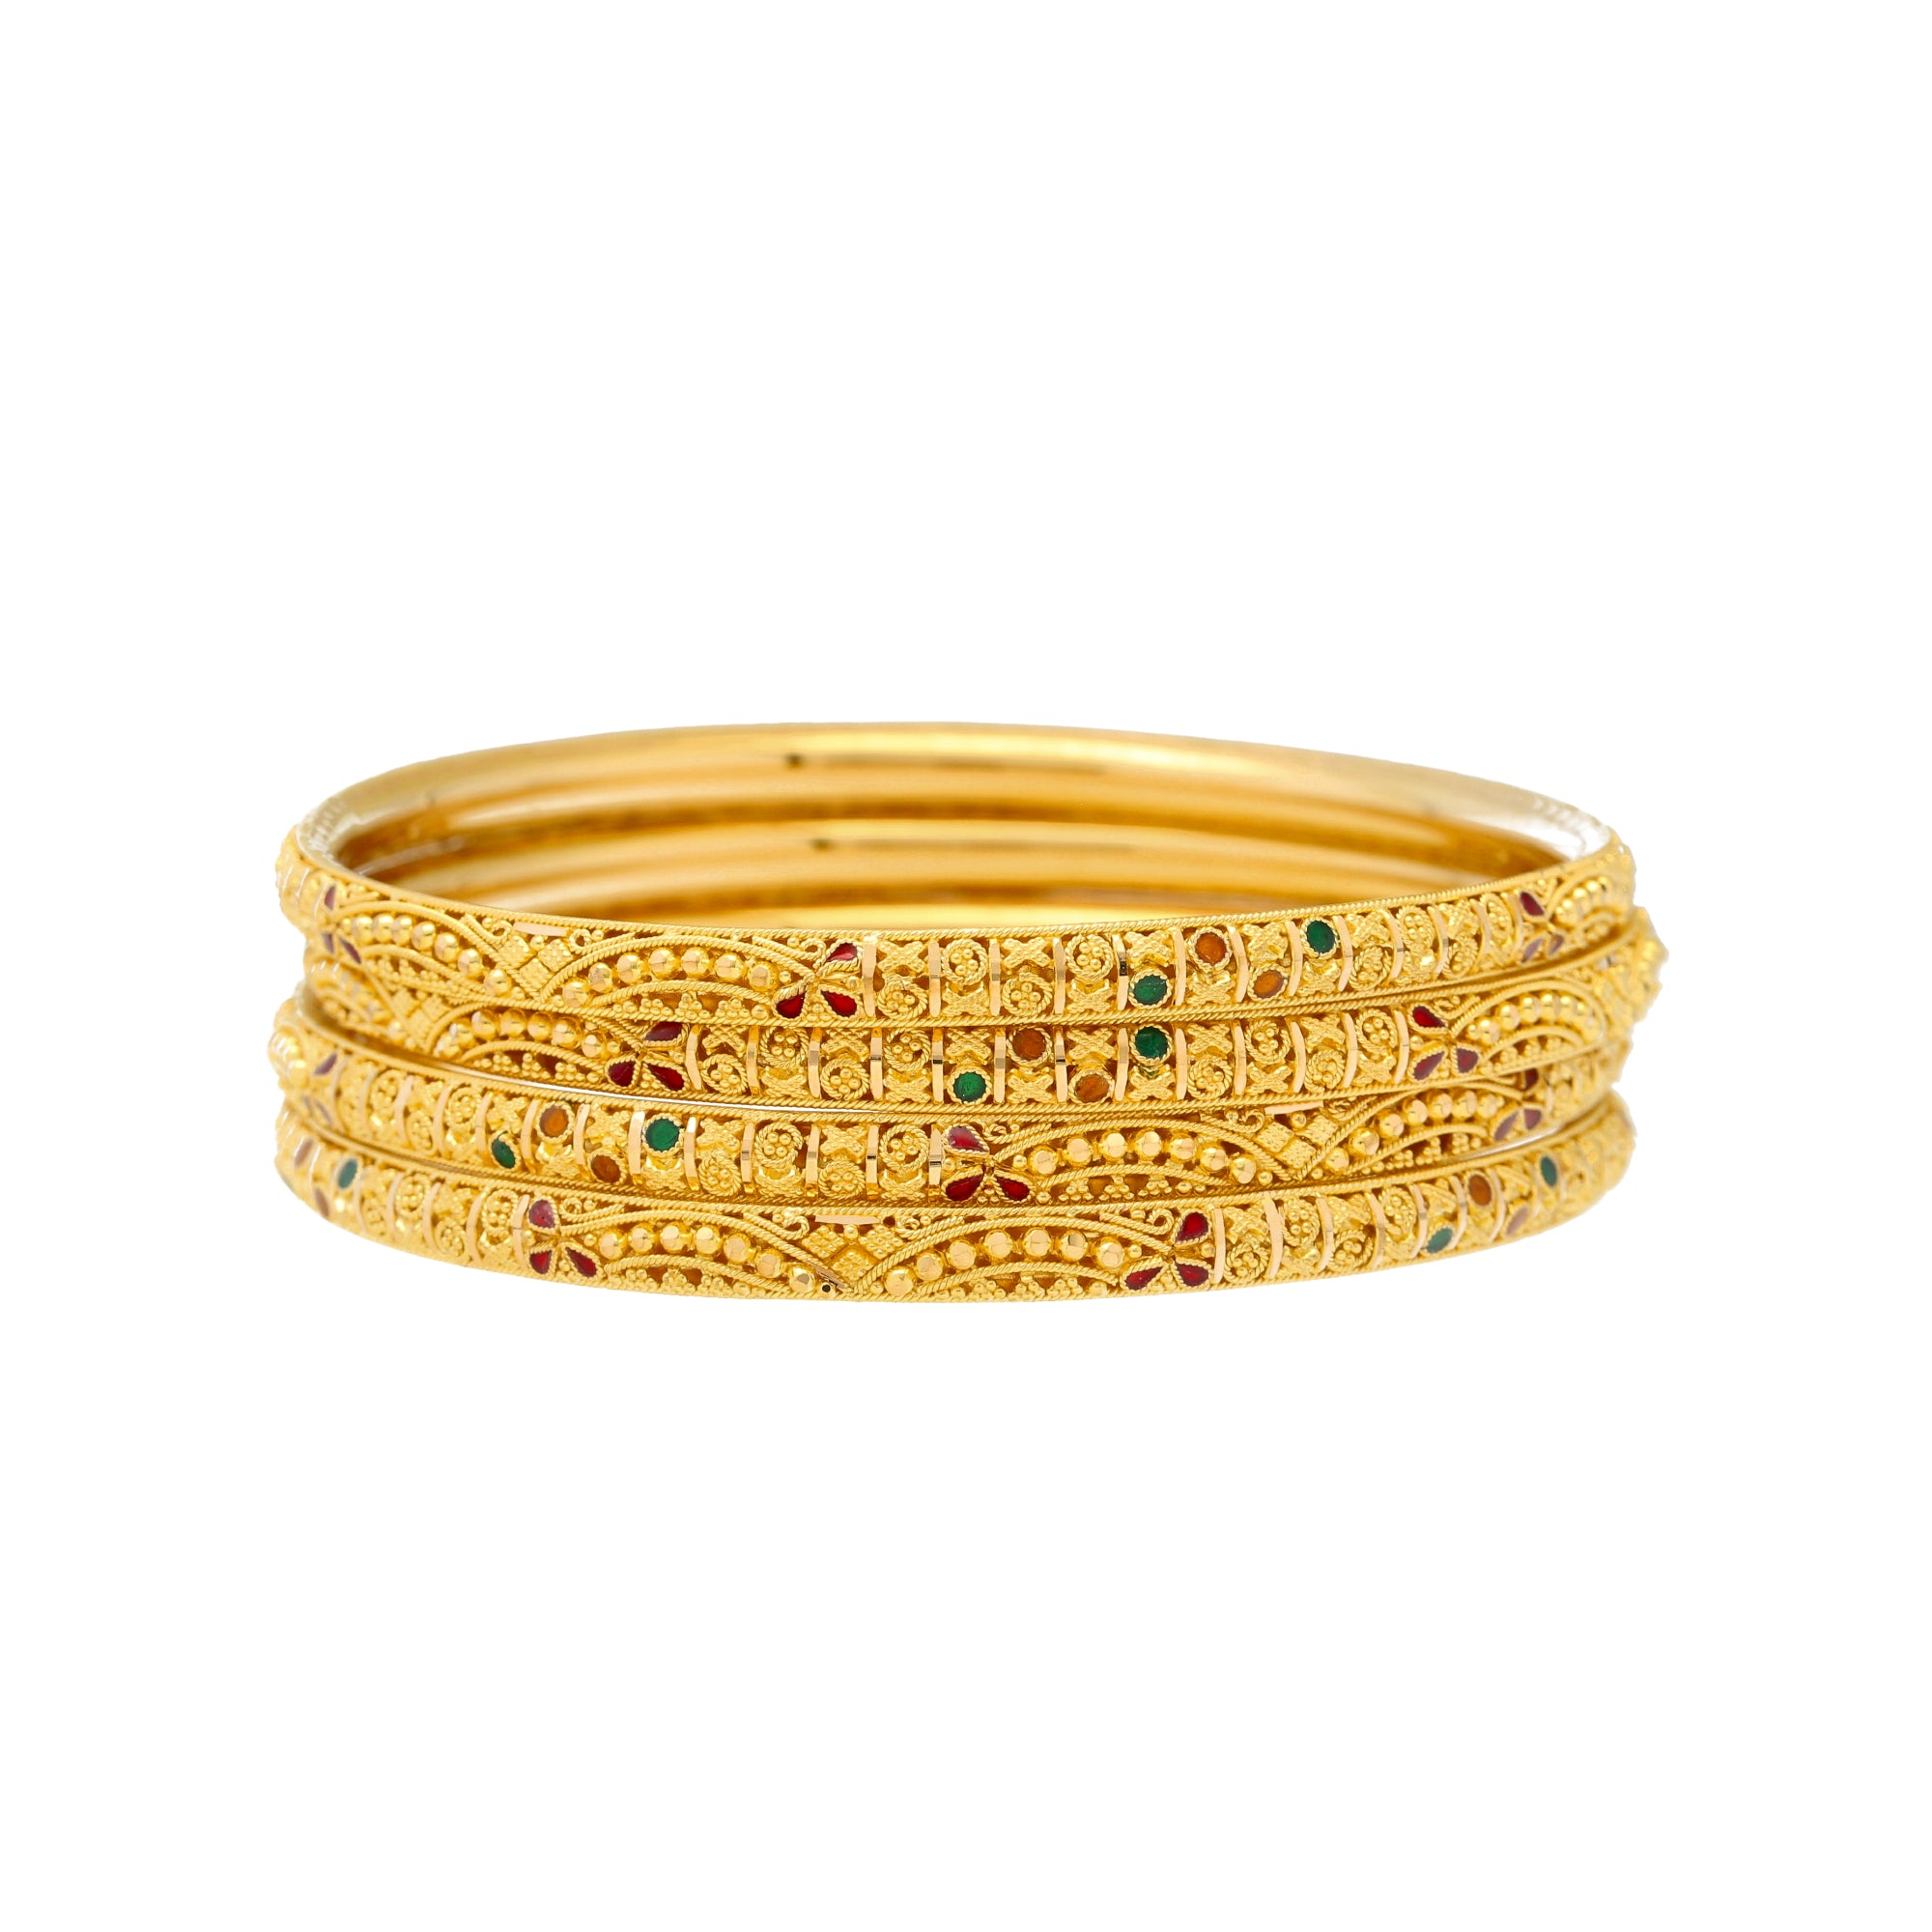 22 k gold enamel bangles - Indian Jewellery Designs